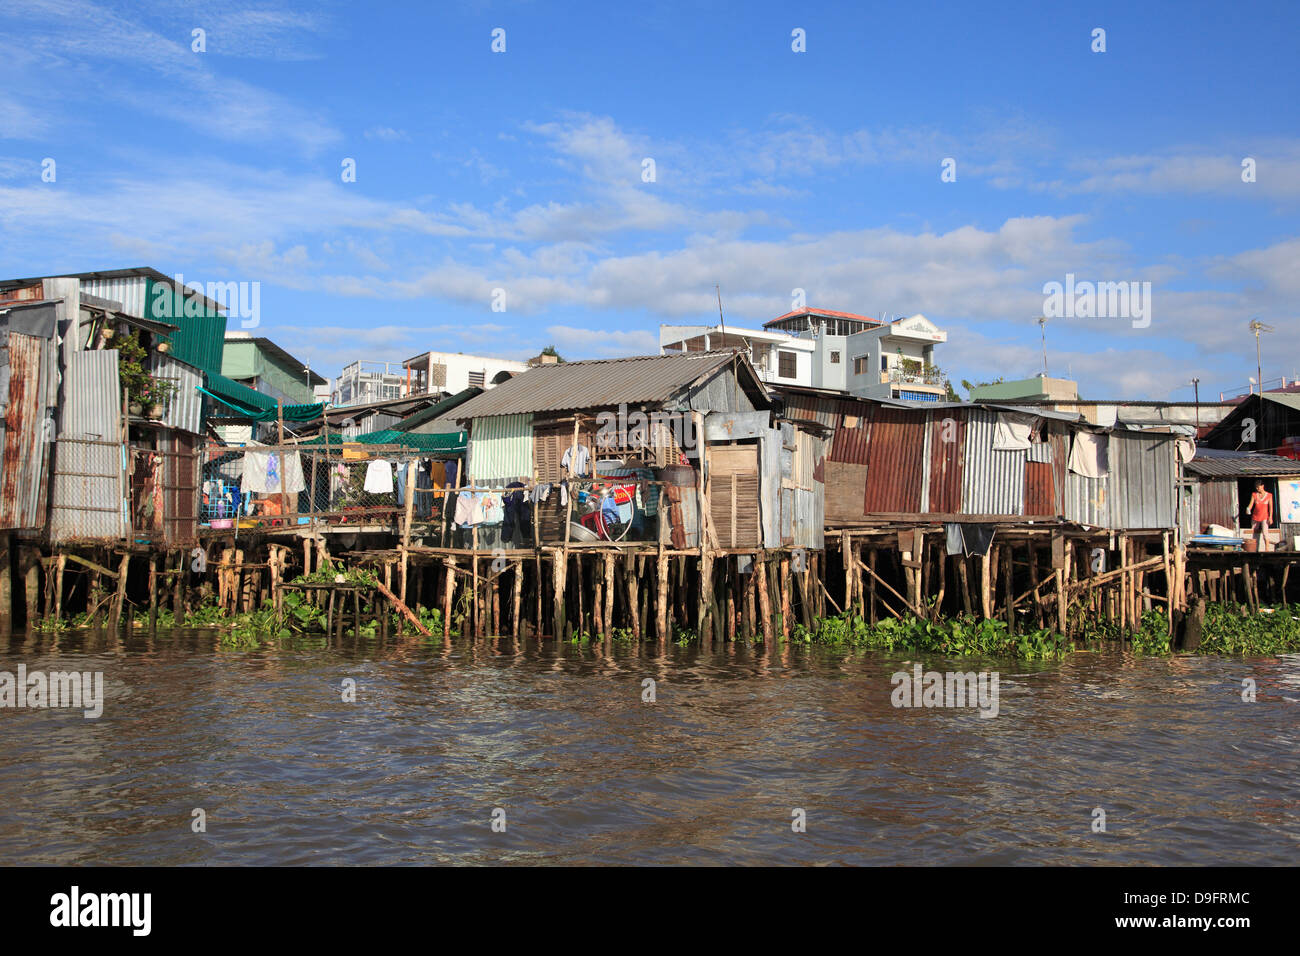 Palafitos en la costanera, Can Tho, el río Mekong, el delta del Mekong, la provincia de Can Tho, Vietnam, Indochina, en el sudeste de Asia Foto de stock